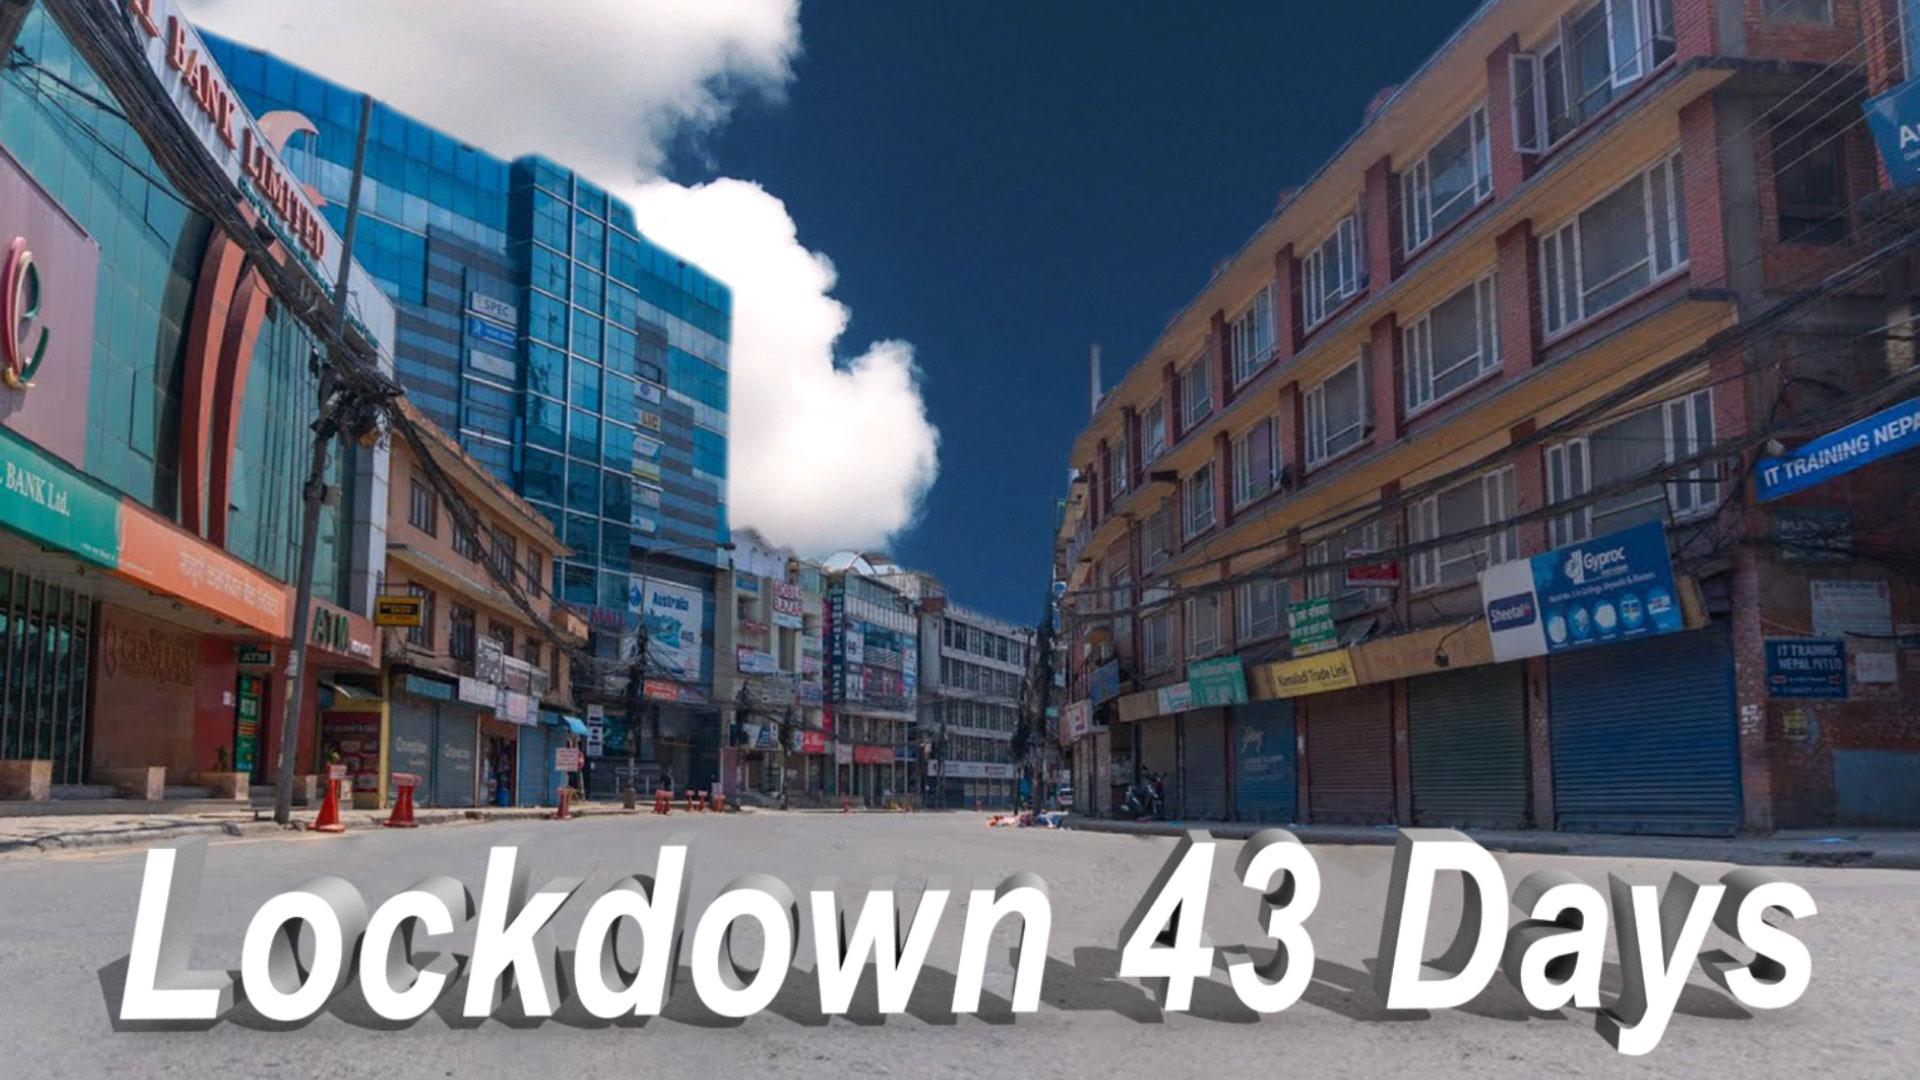 Lockdown 43 days